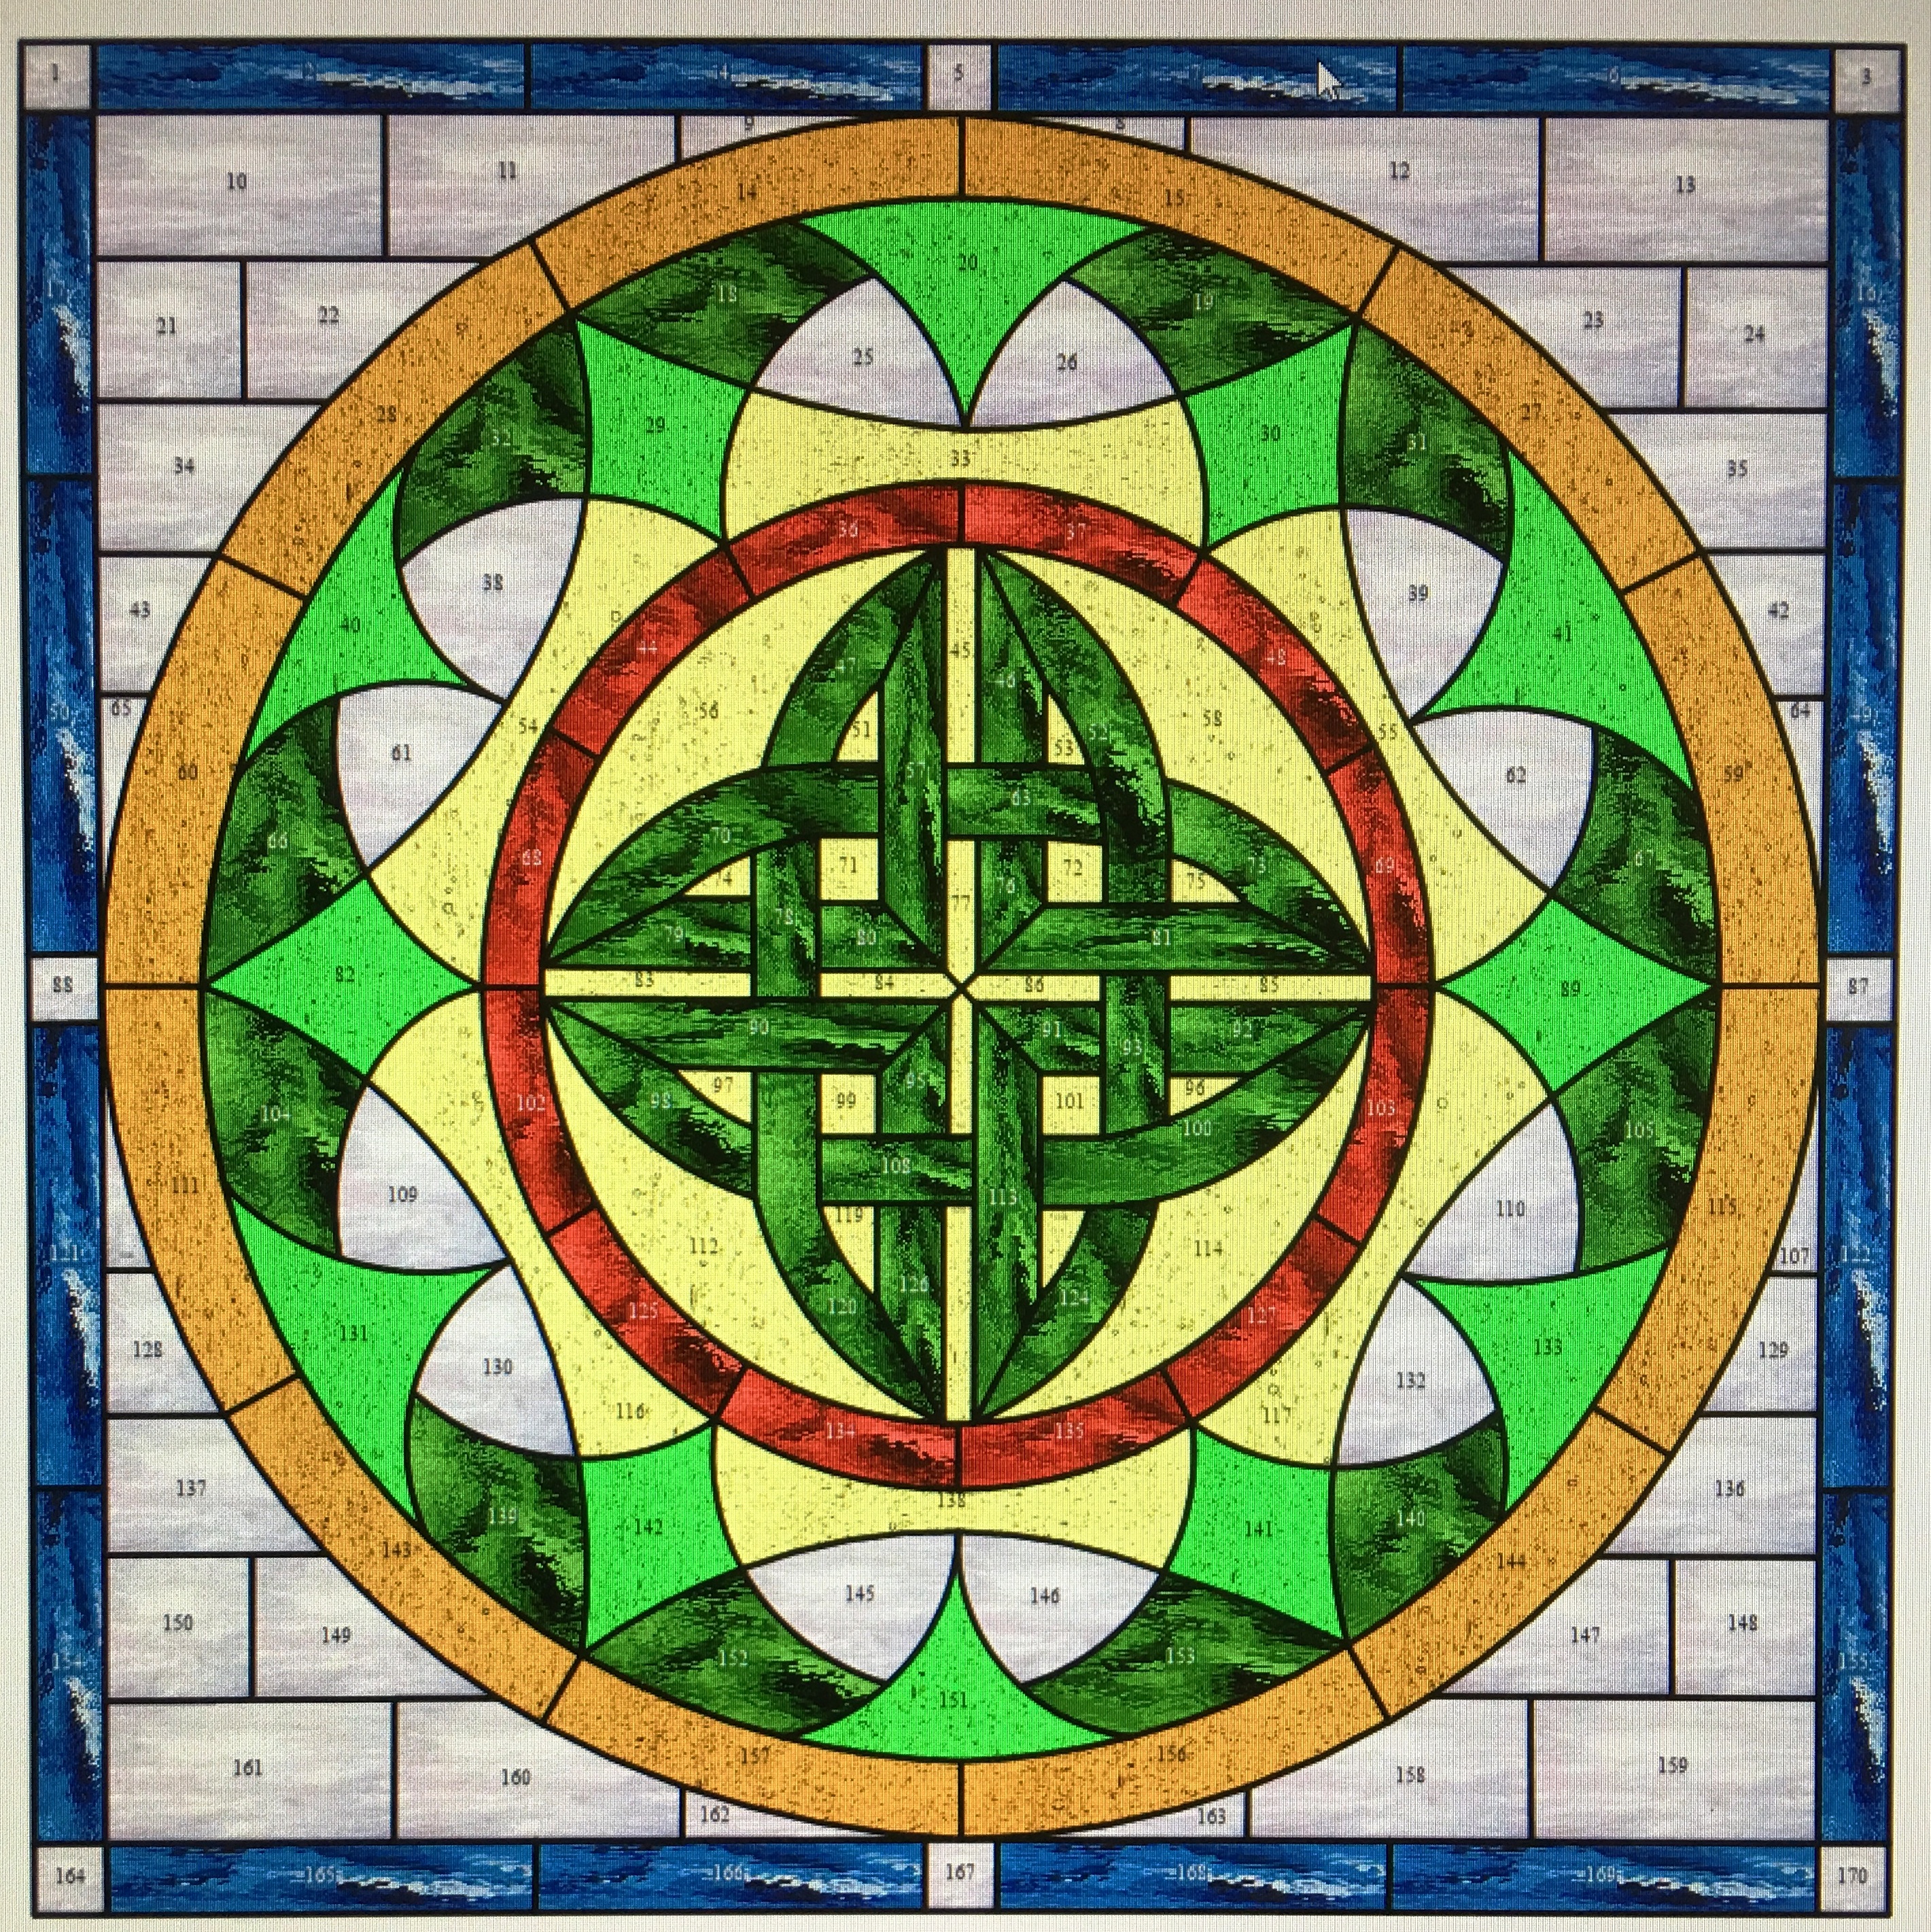 Celtic Circle